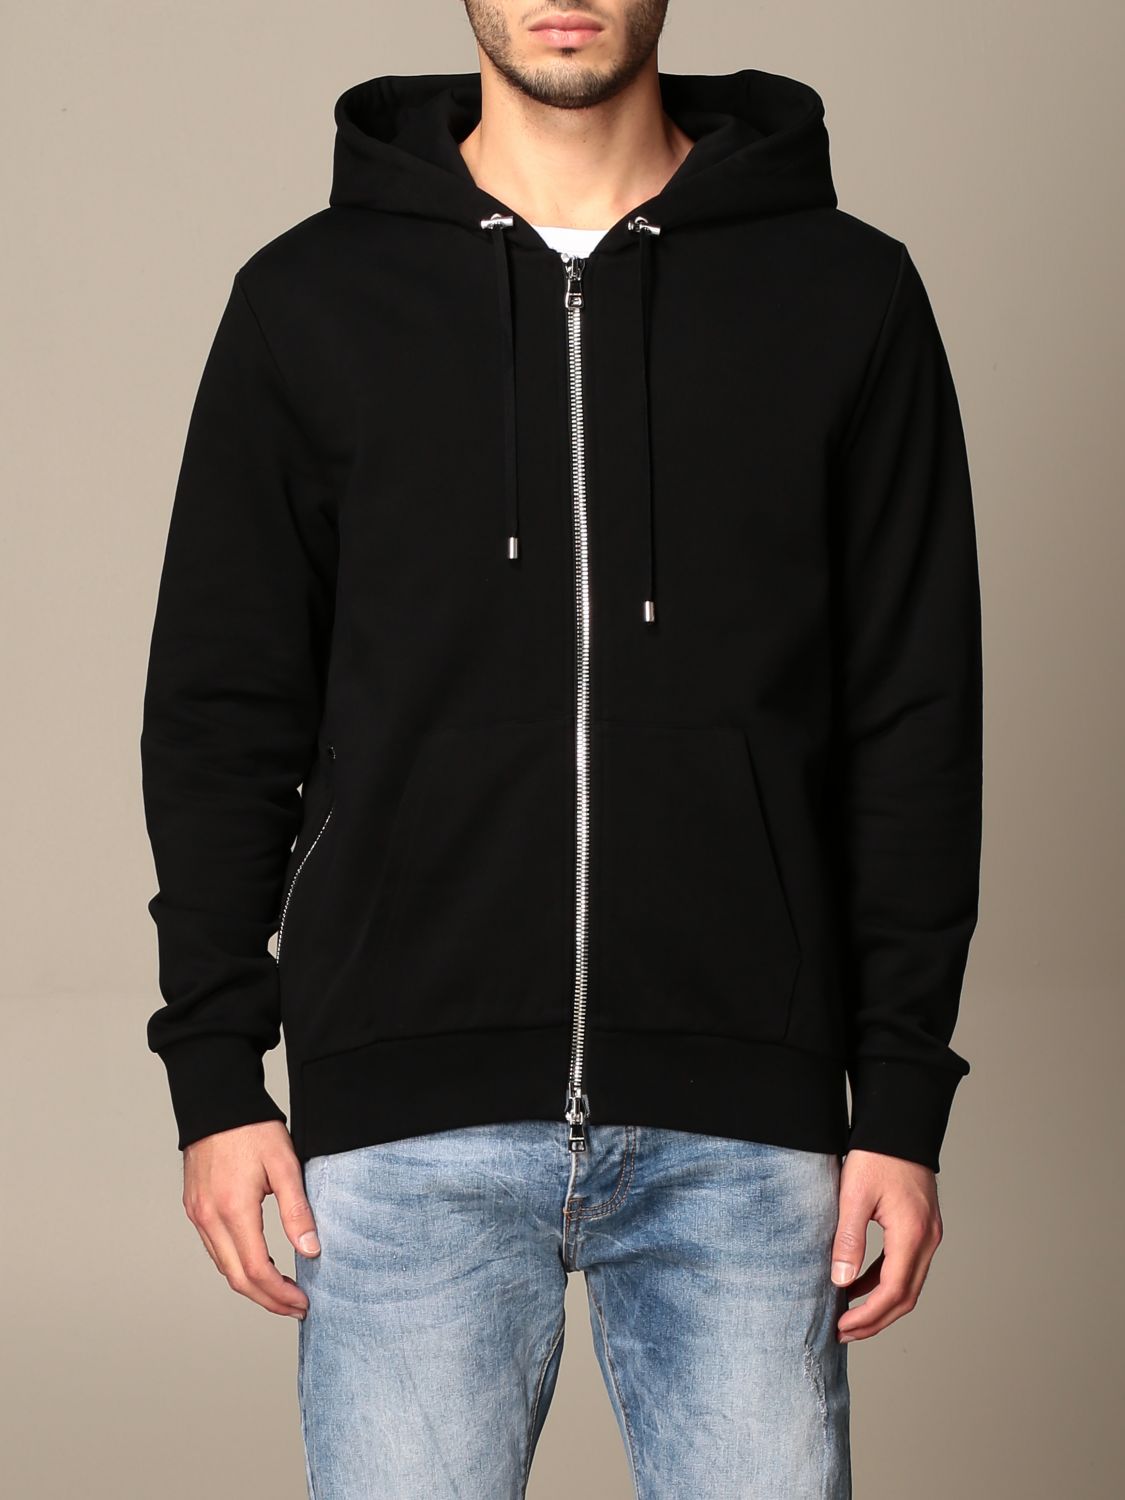 BALMAIN: hoodie in cotton with logo - Black | Balmain sweatshirt ...